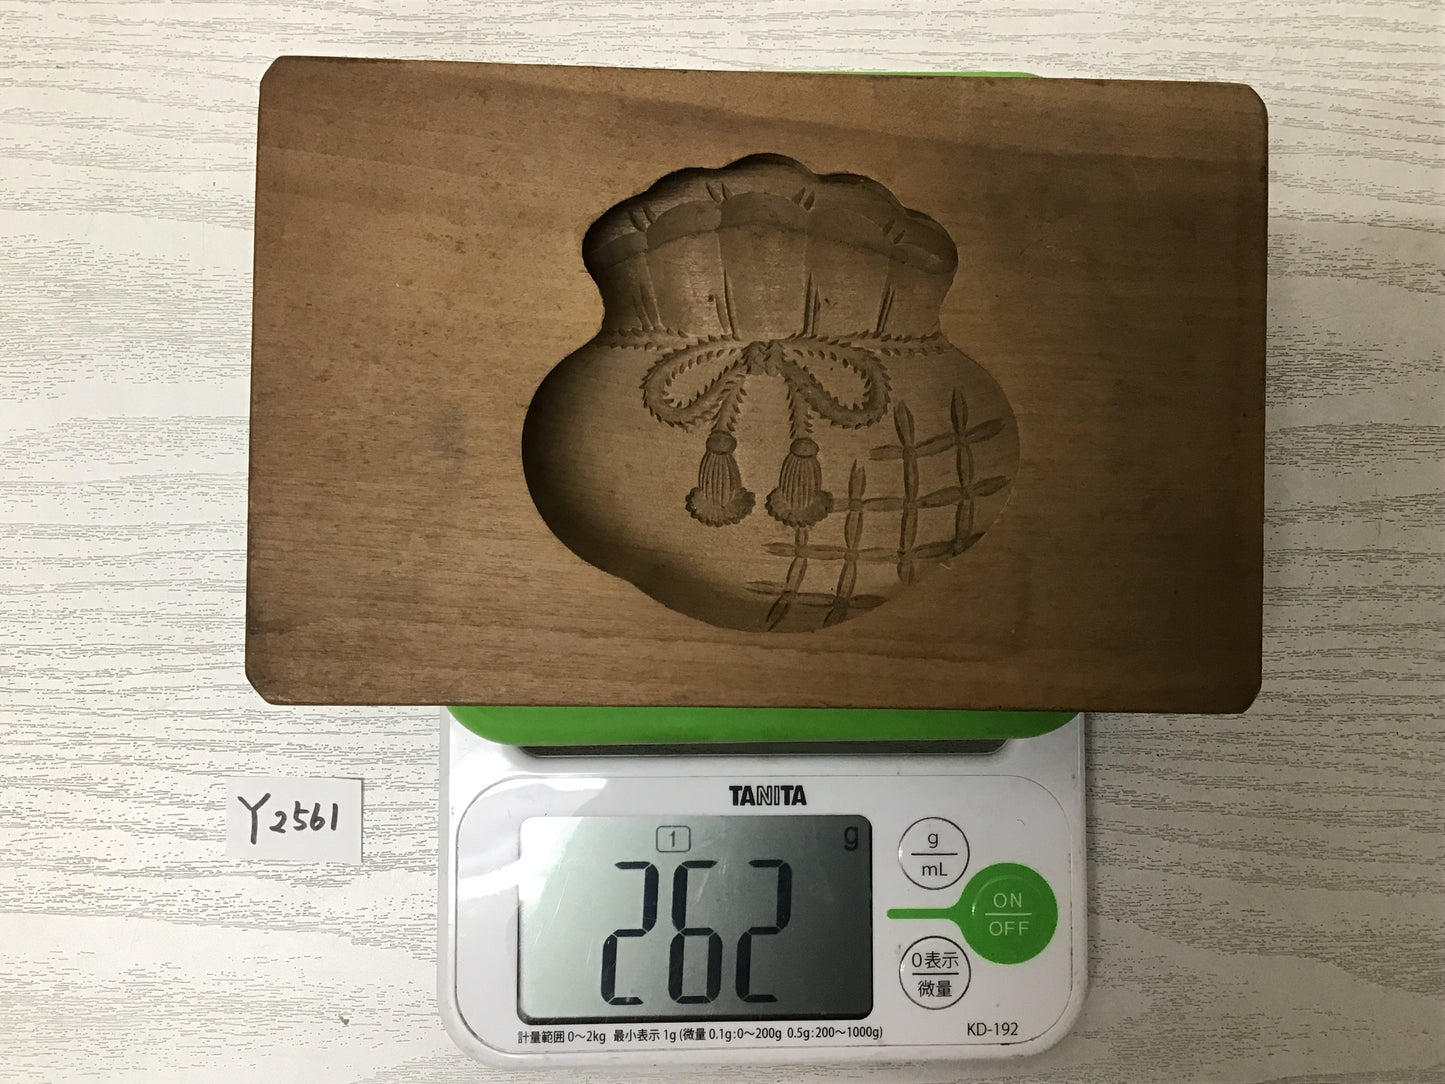 Y2561 KASHIGATA Drawstring Bag pattern Japan vintage Wooden Pastry Mold wagashi